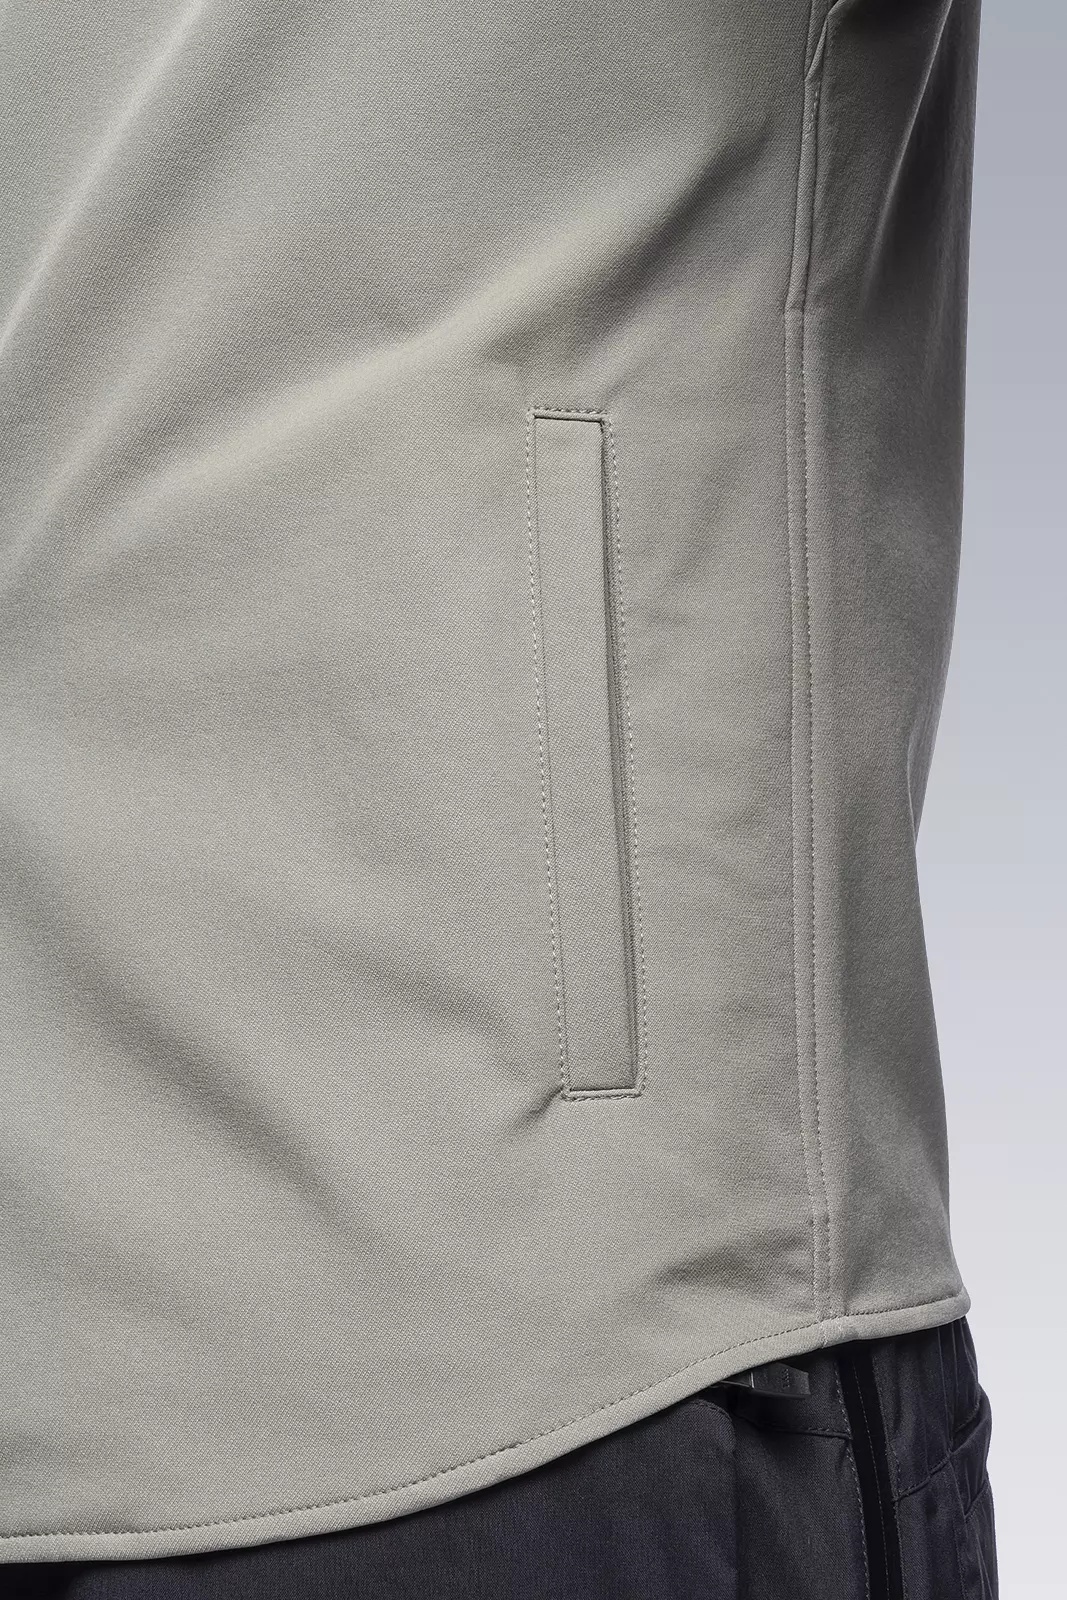 LA6B-DS schoeller® Dryskin™ Long Sleeve Shirt Alpha Green - 26